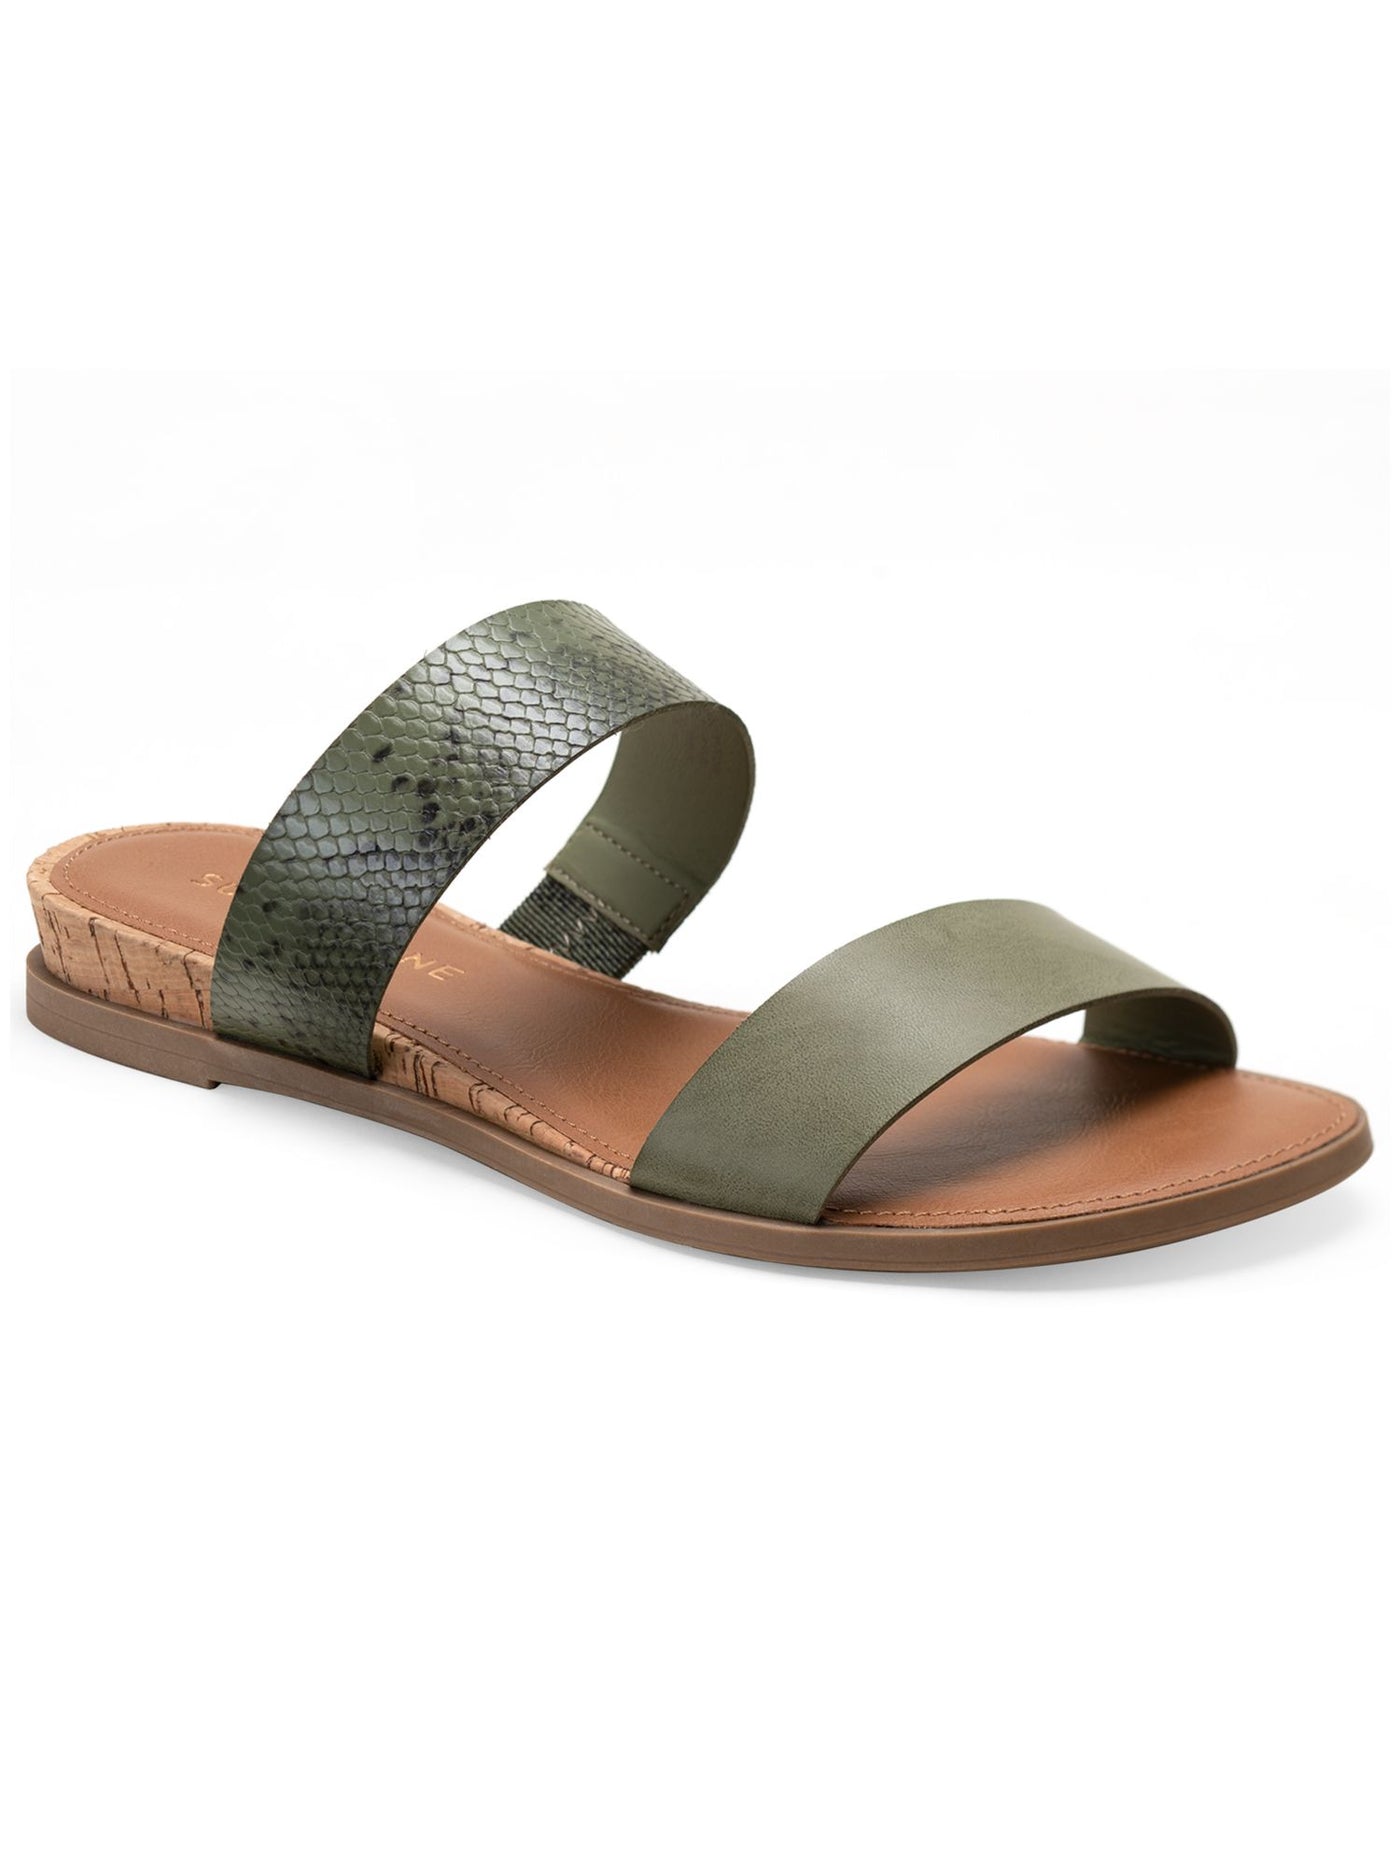 SUN STONE Womens Green Snakeskin Cushioned Slip Resistant Easten Round Toe Wedge Slip On Slide Sandals Shoes 9.5 M